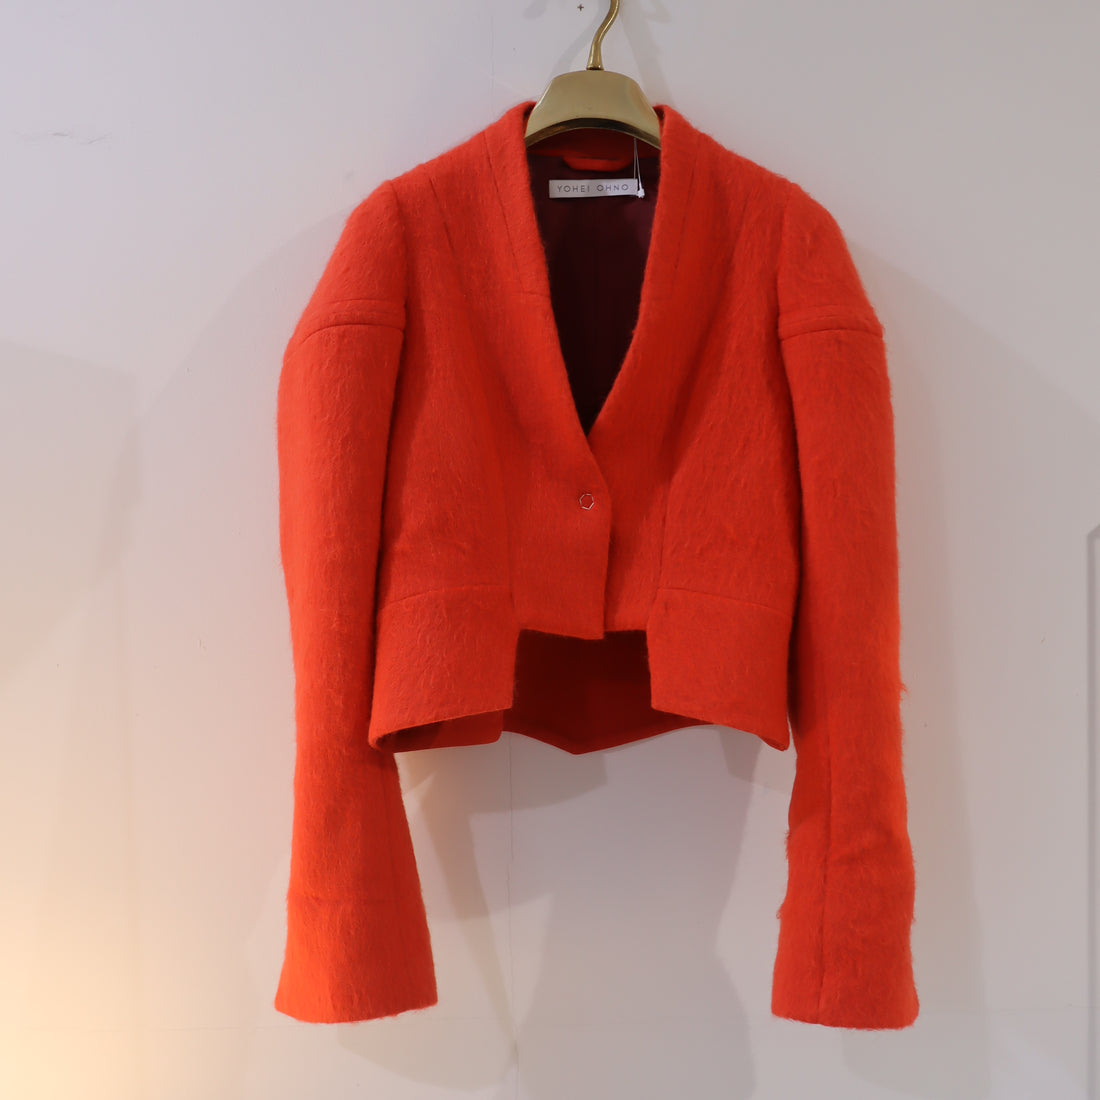 yohei ohno 2019ss padded shaped jacket | sunvieweyewear.com